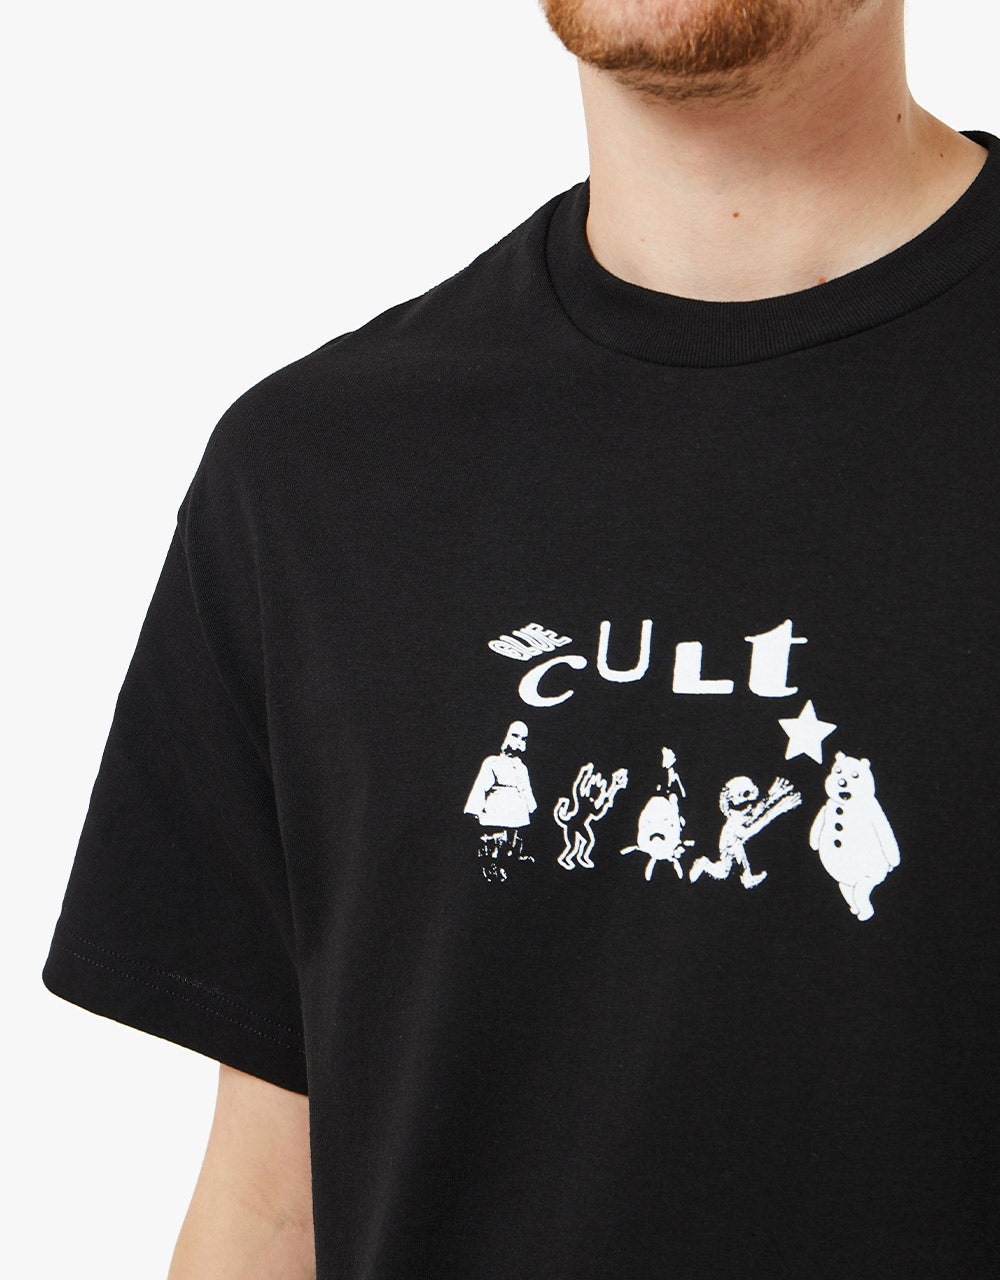 Glue Join Us T-Shirt - Black